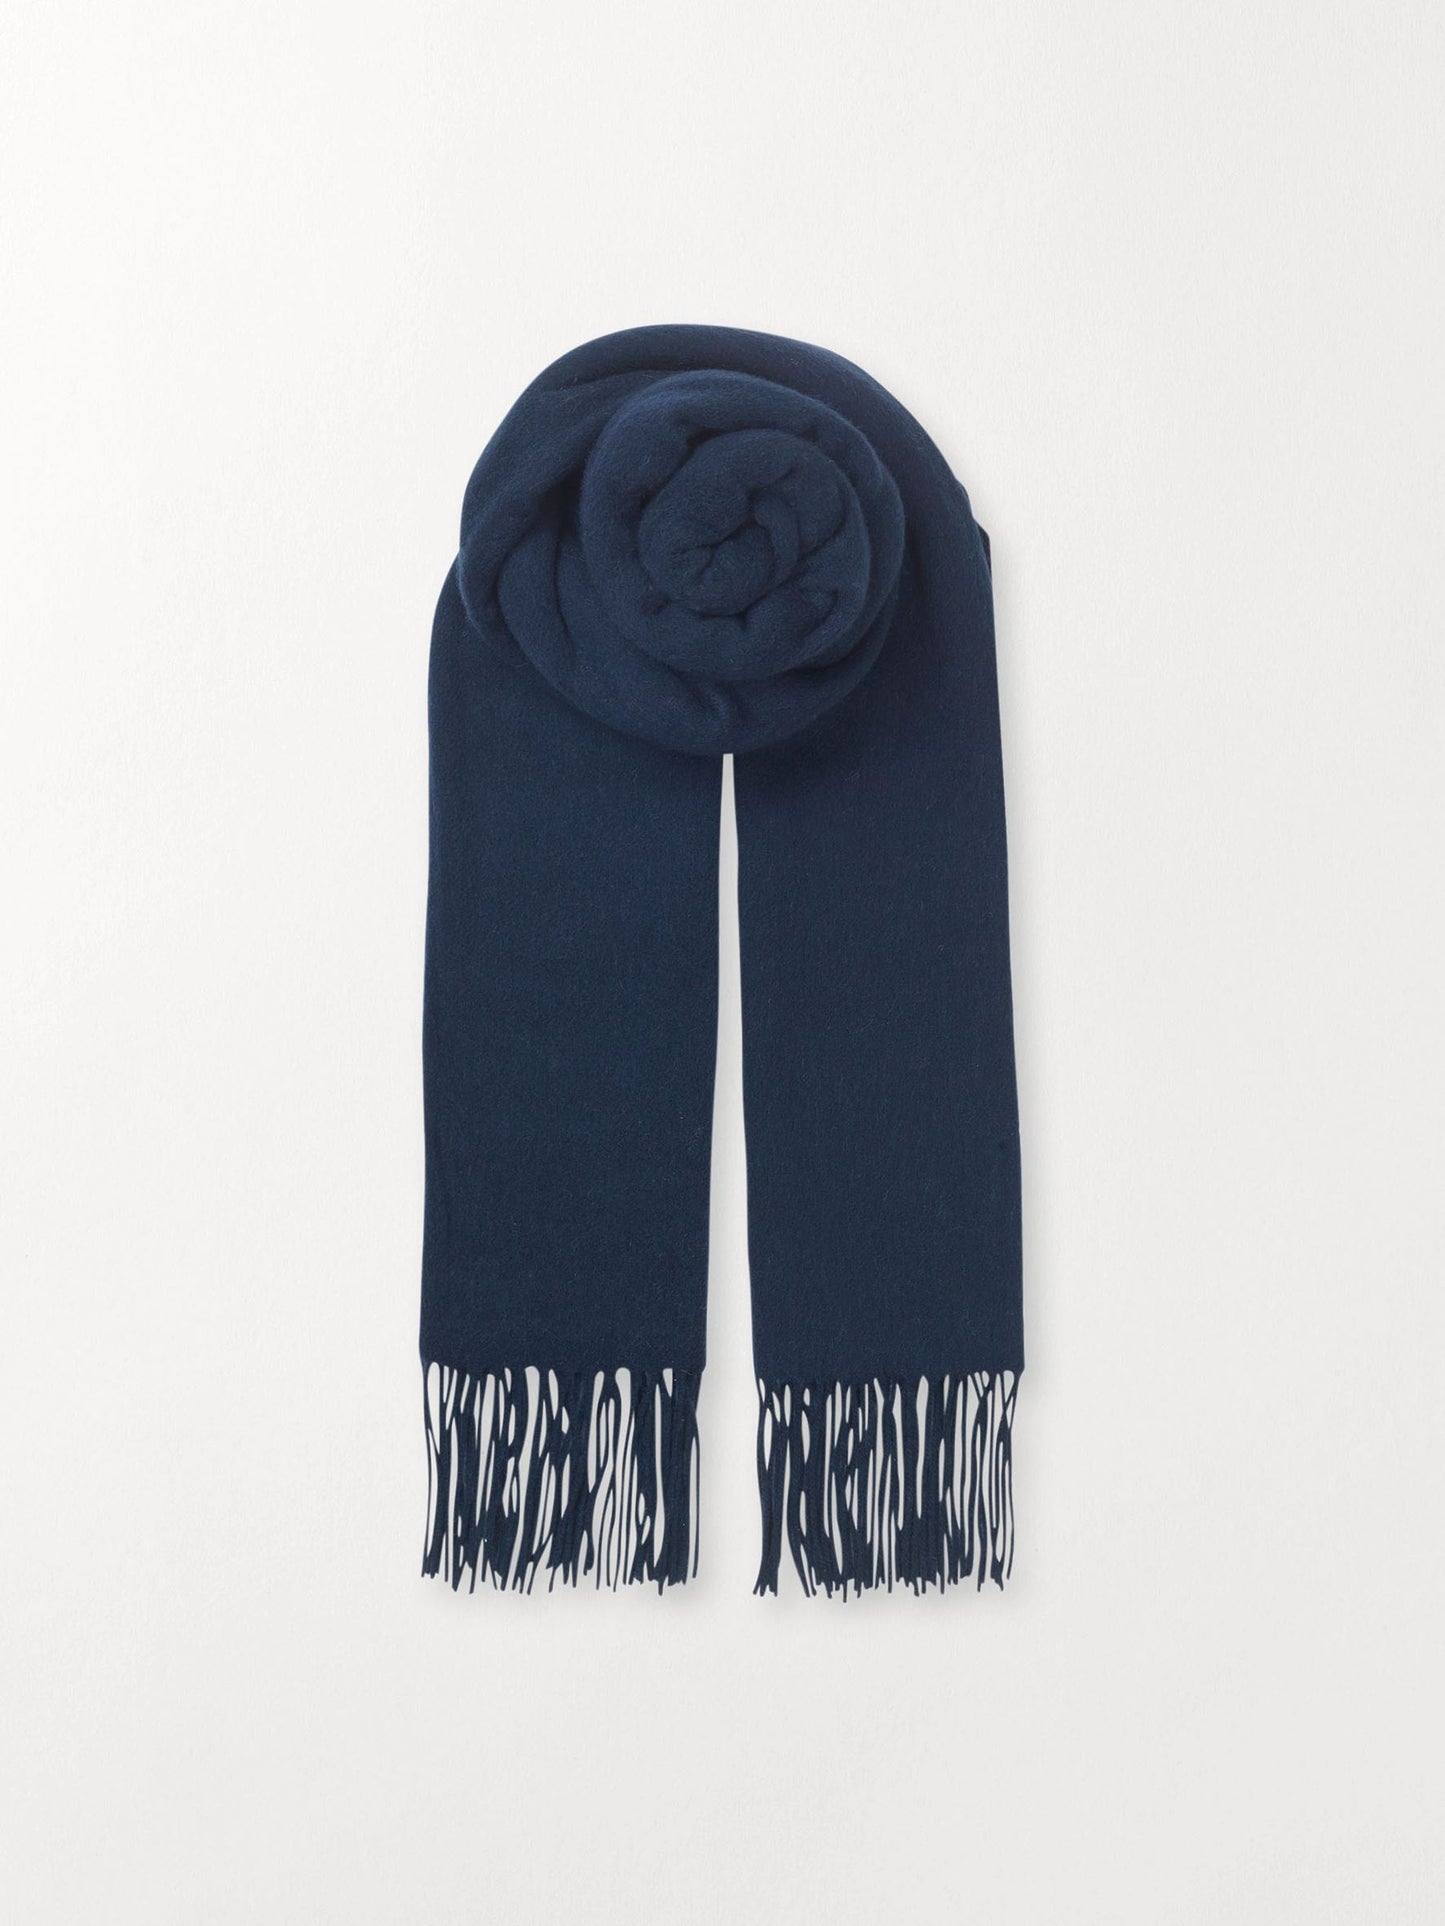 Becksöndergaard, Crystal Edition Scarf - Dark Blue, scarves, scarves, gifts